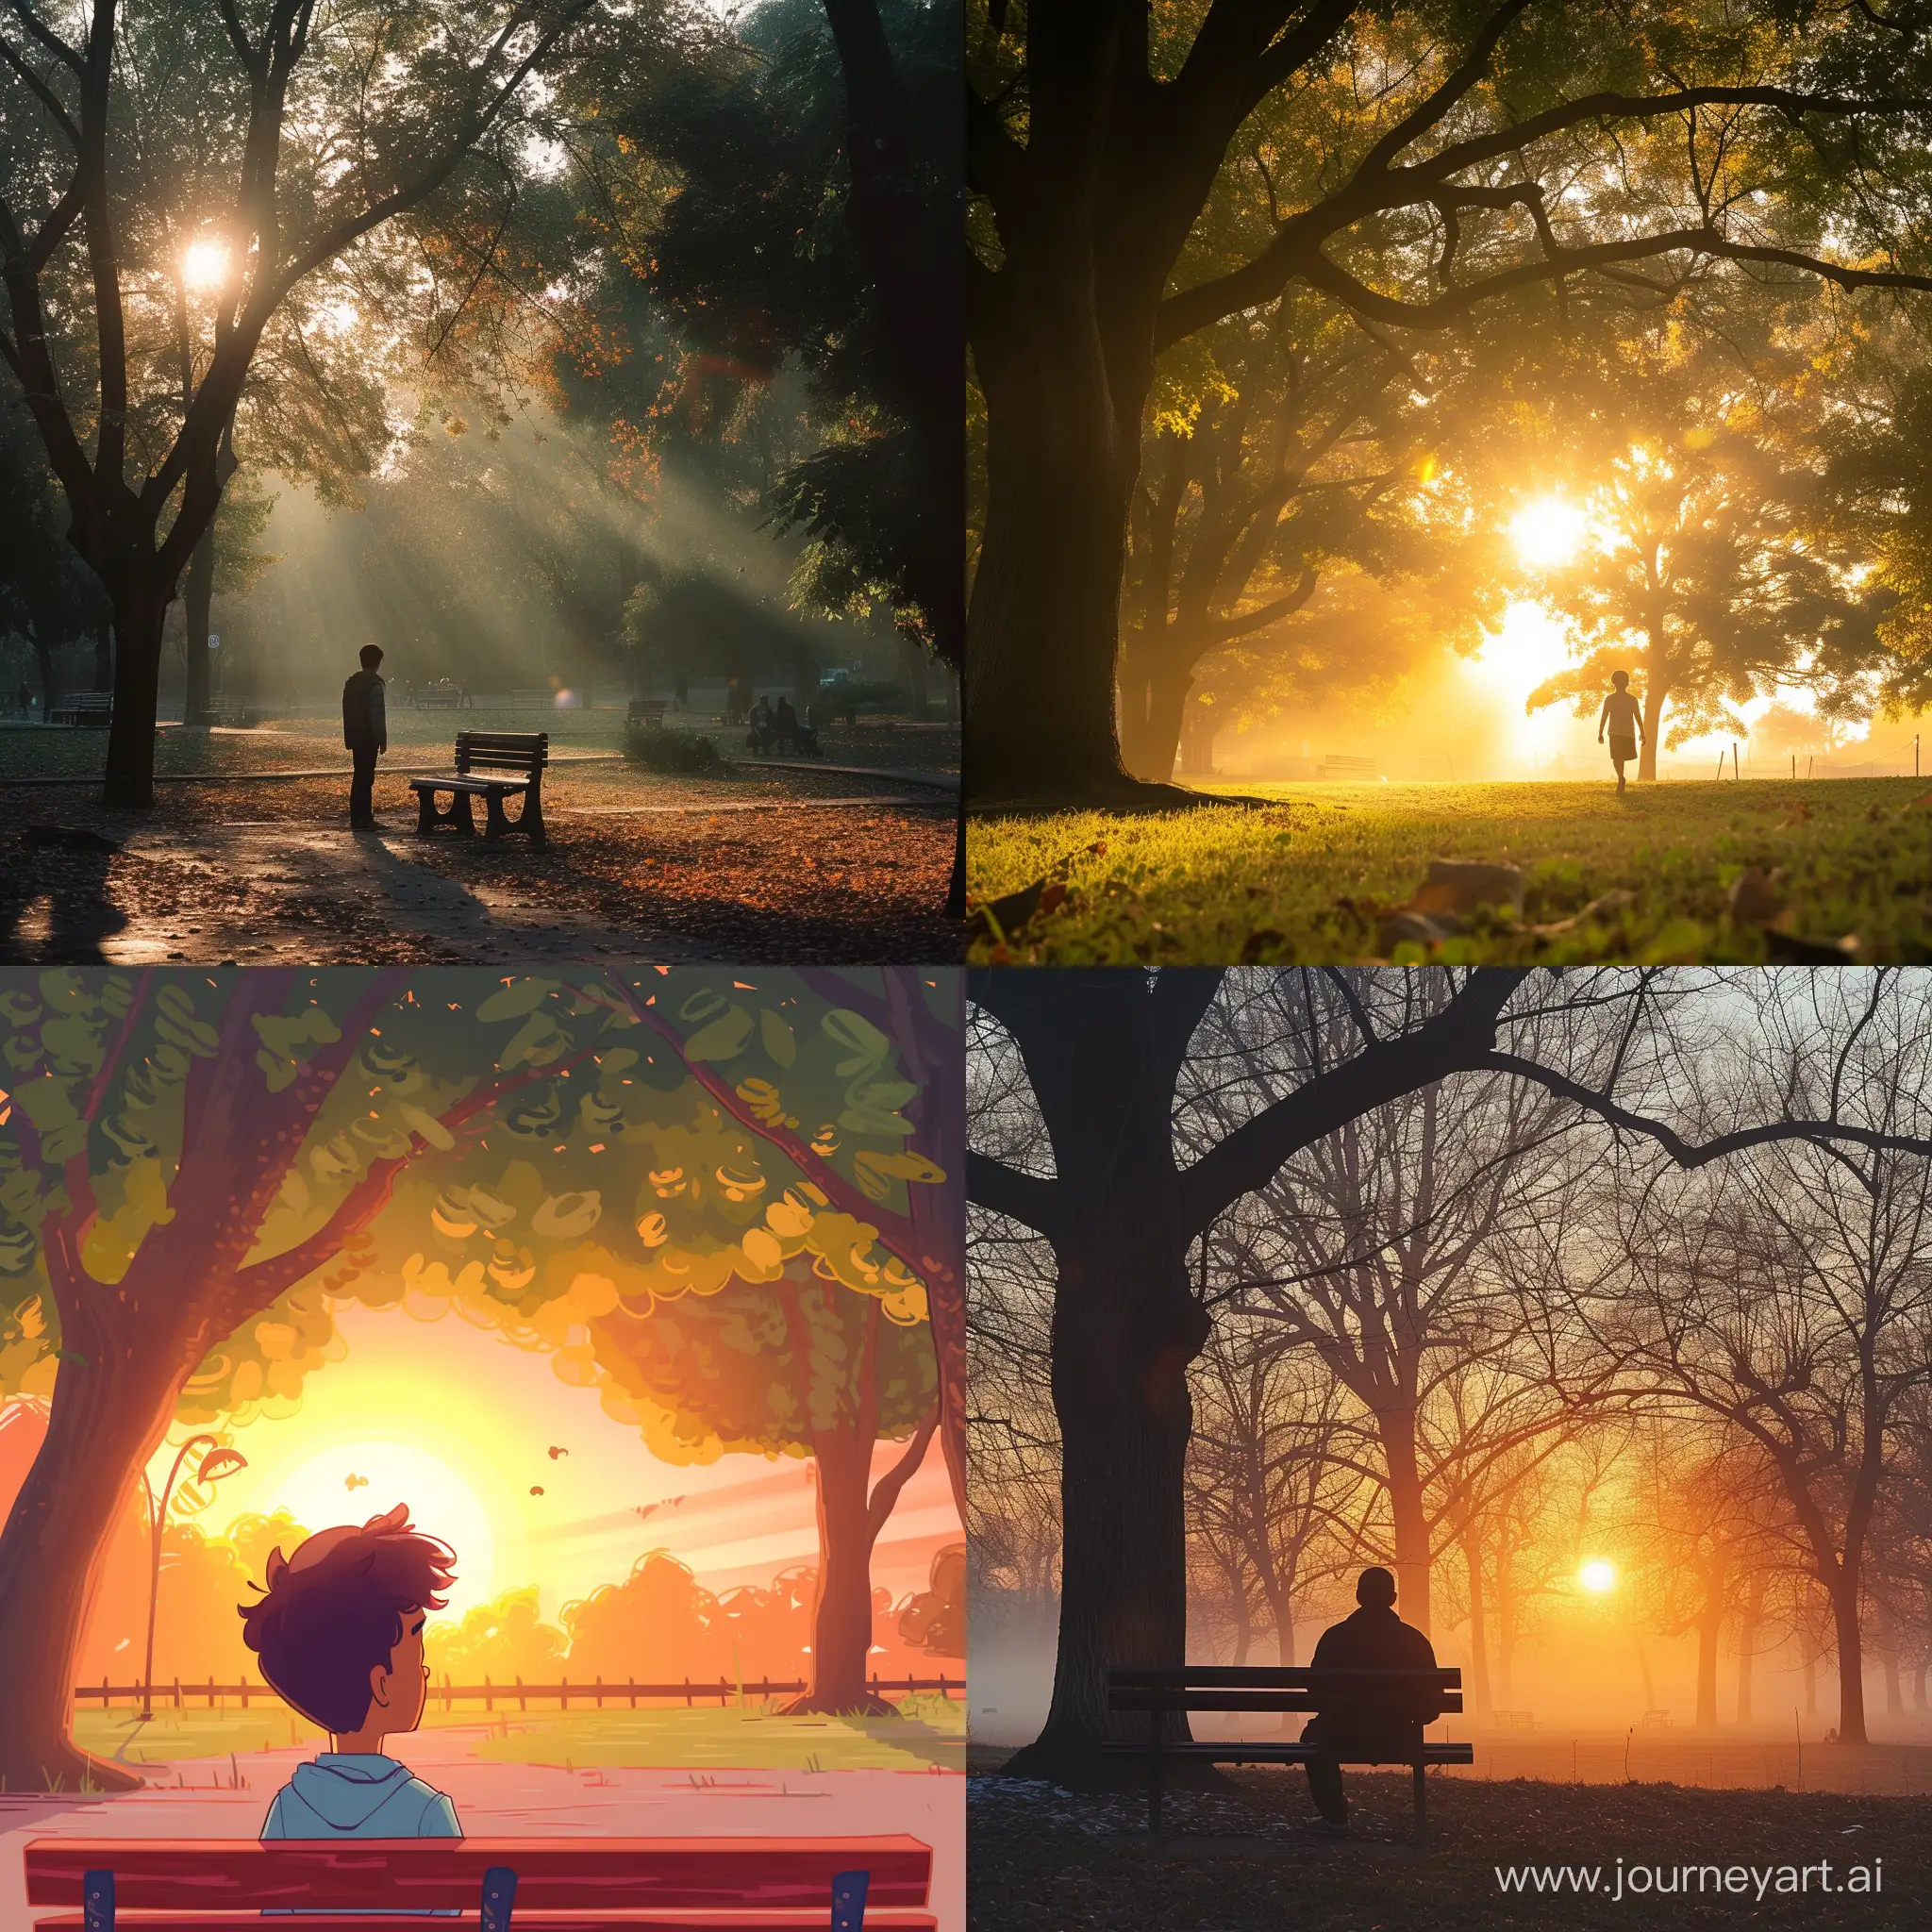 Joyful-Boy-Embracing-Nature-in-a-Sunrise-Park-Scene